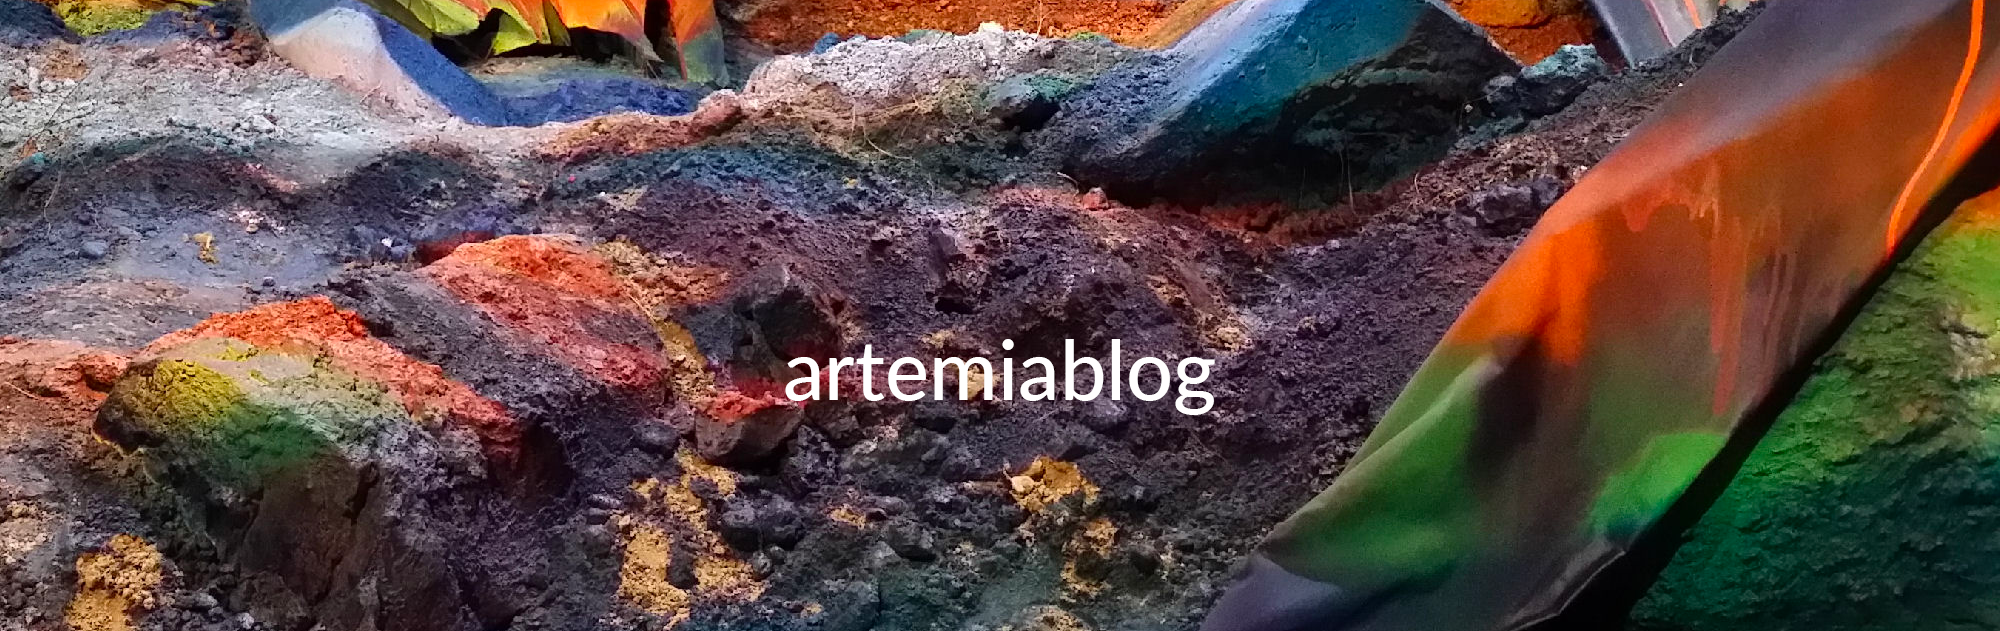 Artemiablog